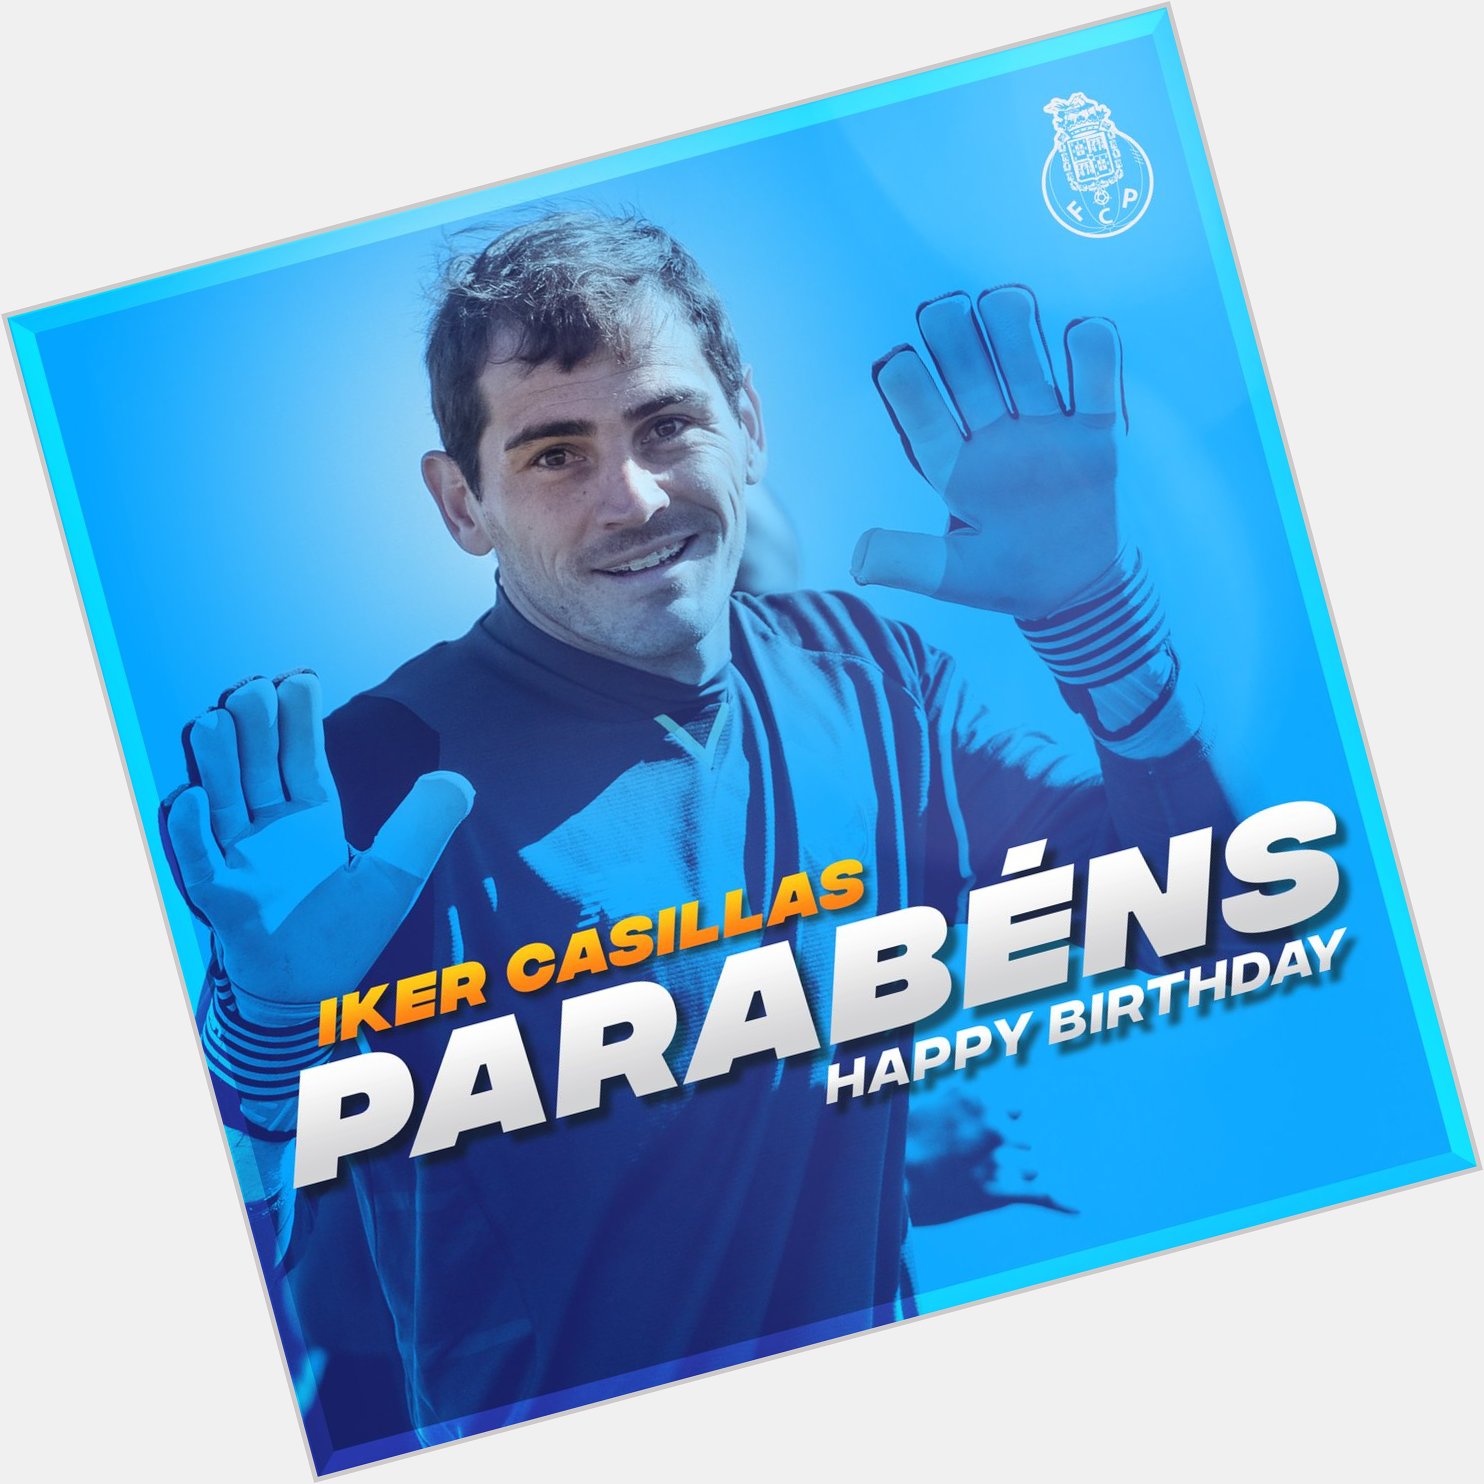 Iker Casillas, 37.º   Deixa a tua mensagem de parabéns!
Happy birthday!
iFeliz cumpleaños!  